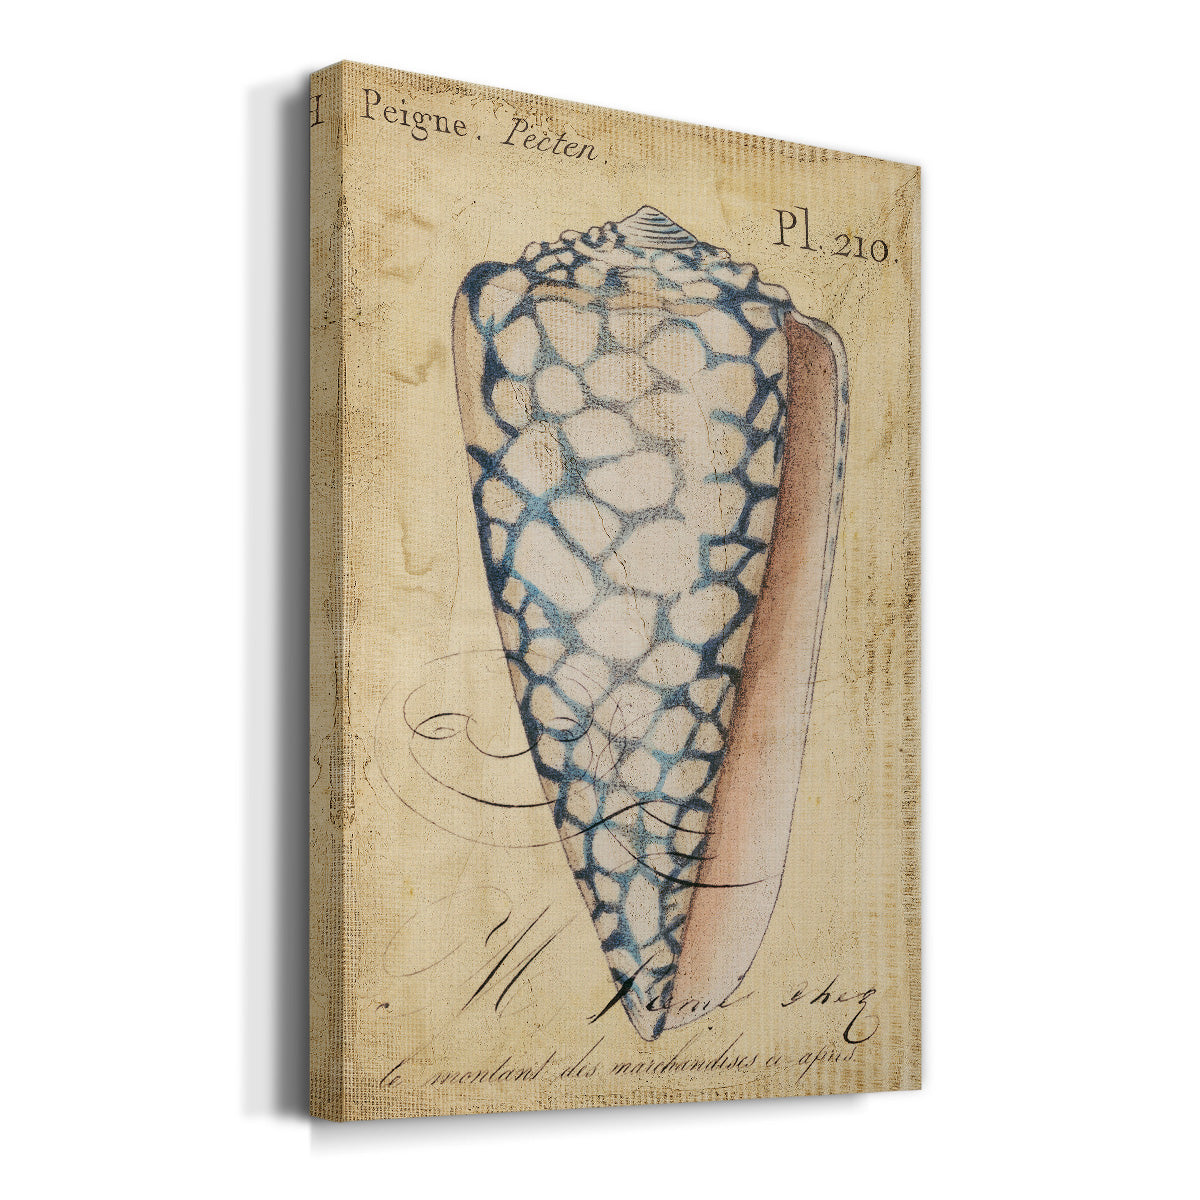 Seashell Ephemera IV Premium Gallery Wrapped Canvas - Ready to Hang